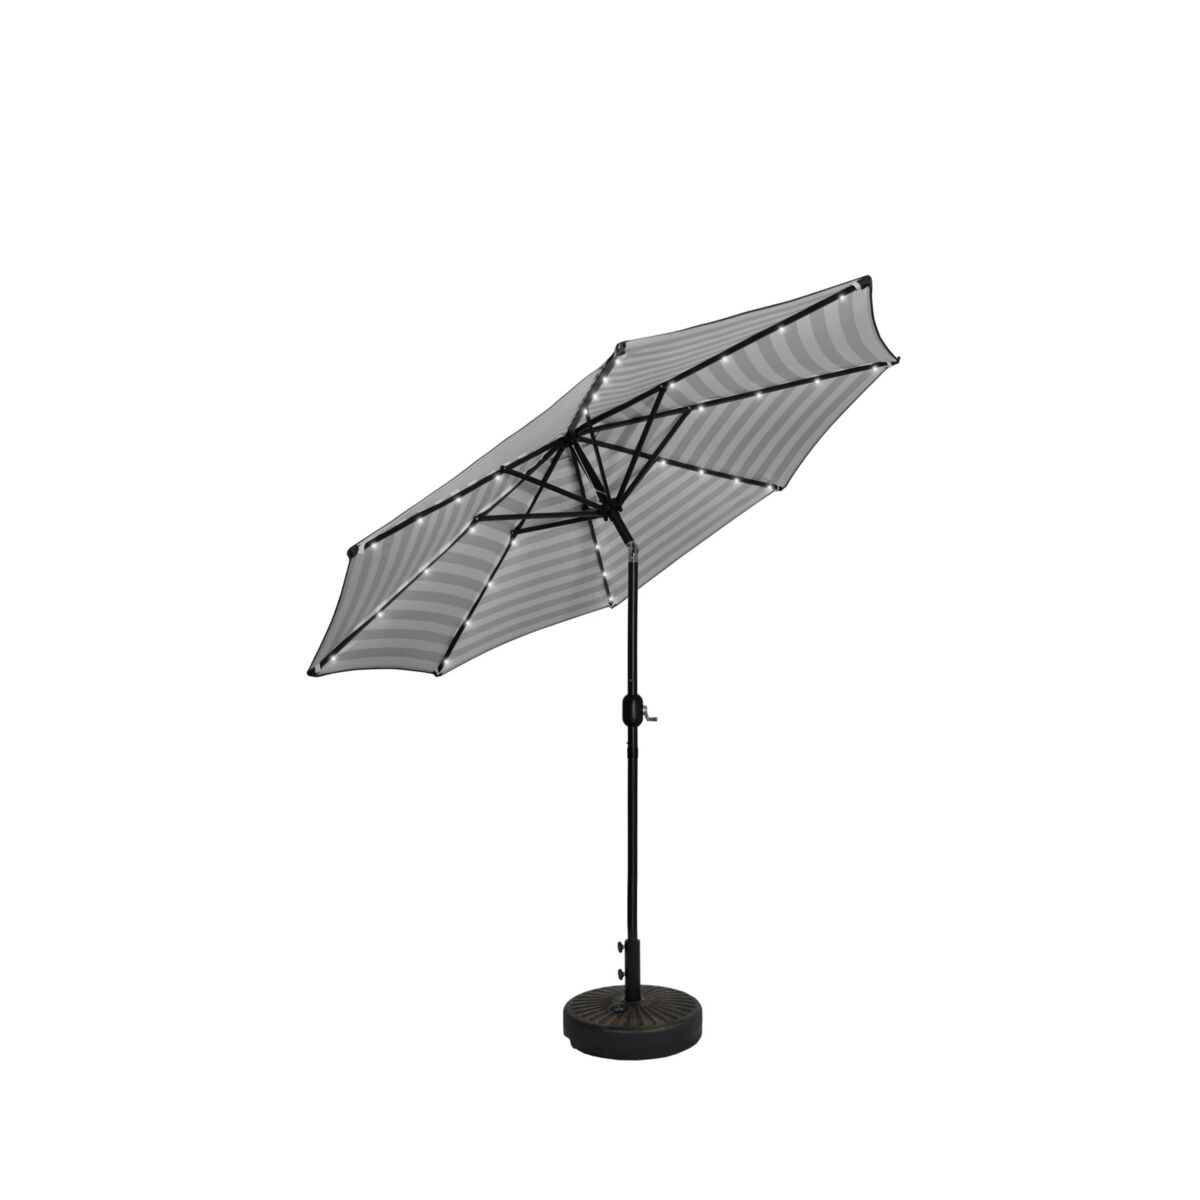 WestinTrends 9 ft. Patio Solar Power Led lights Market Umbrella with Bronze Round Base - Black White Stripe